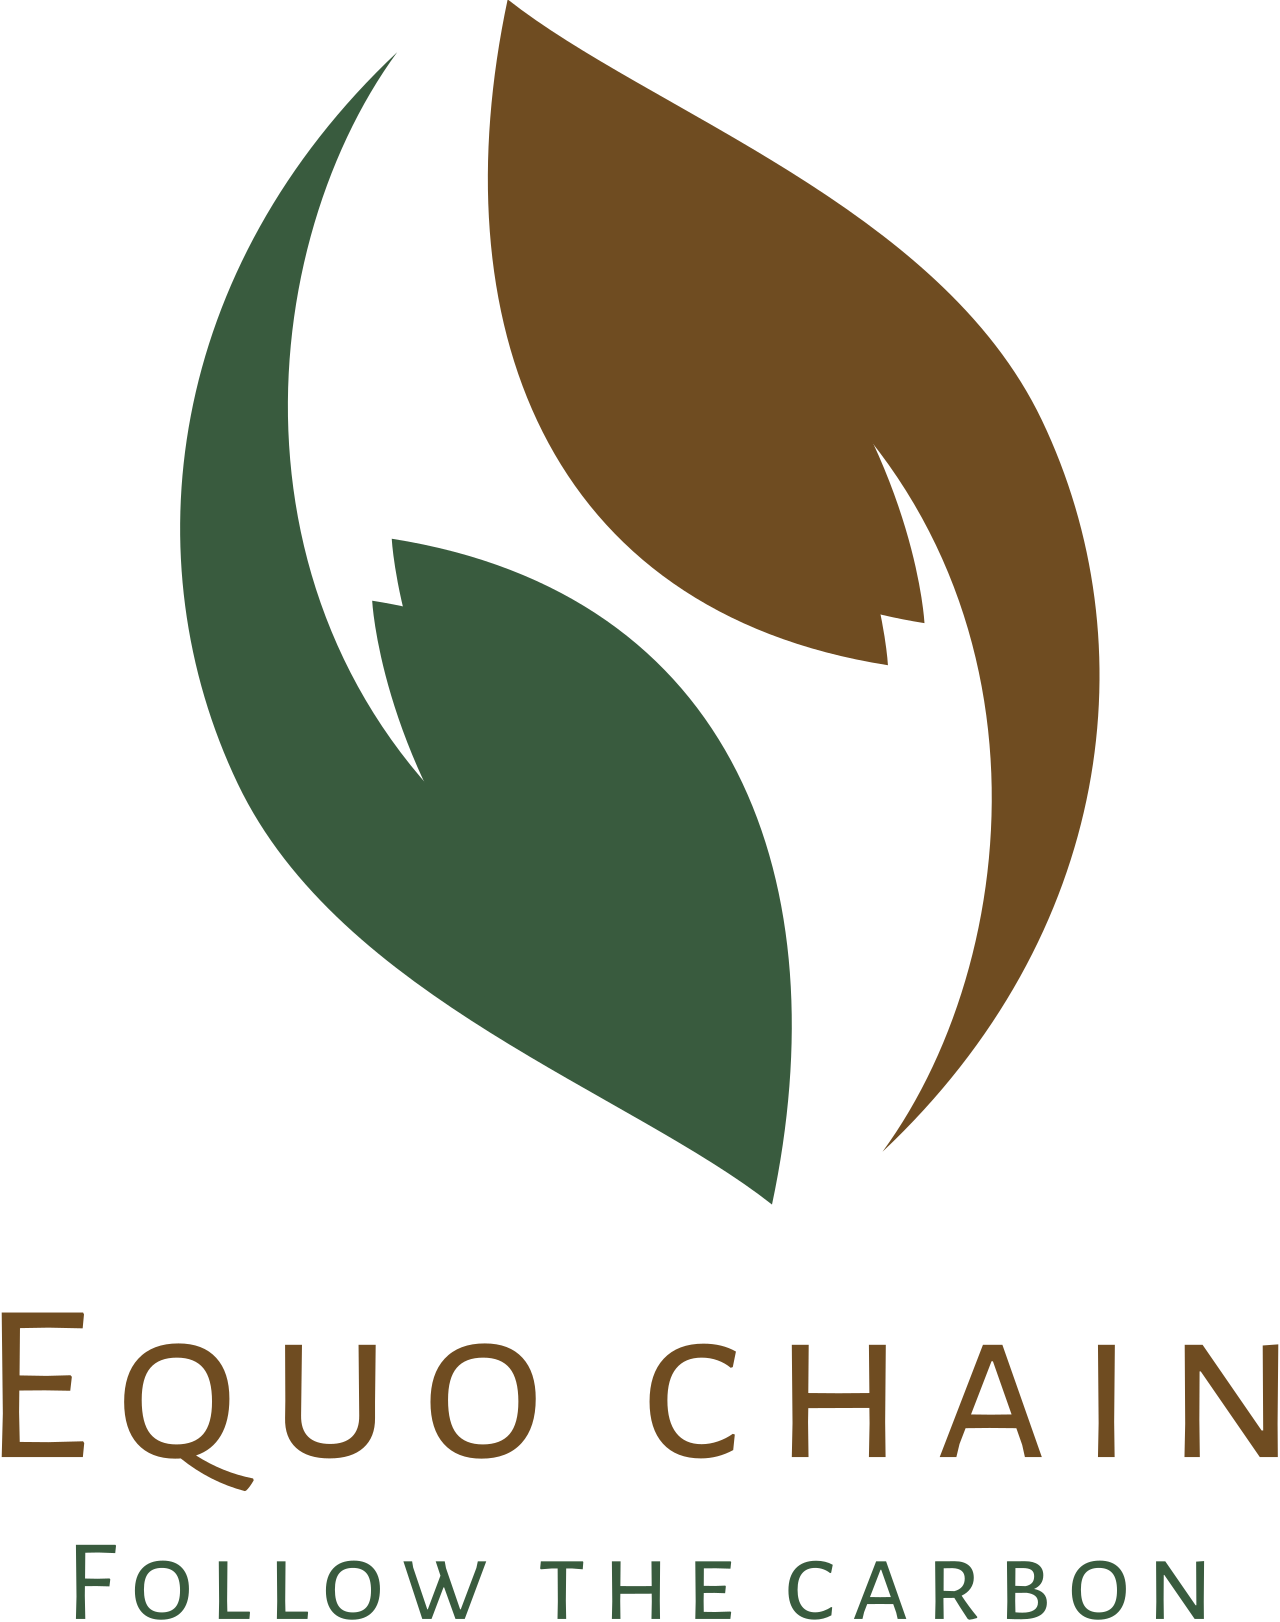 Equo Chain startup